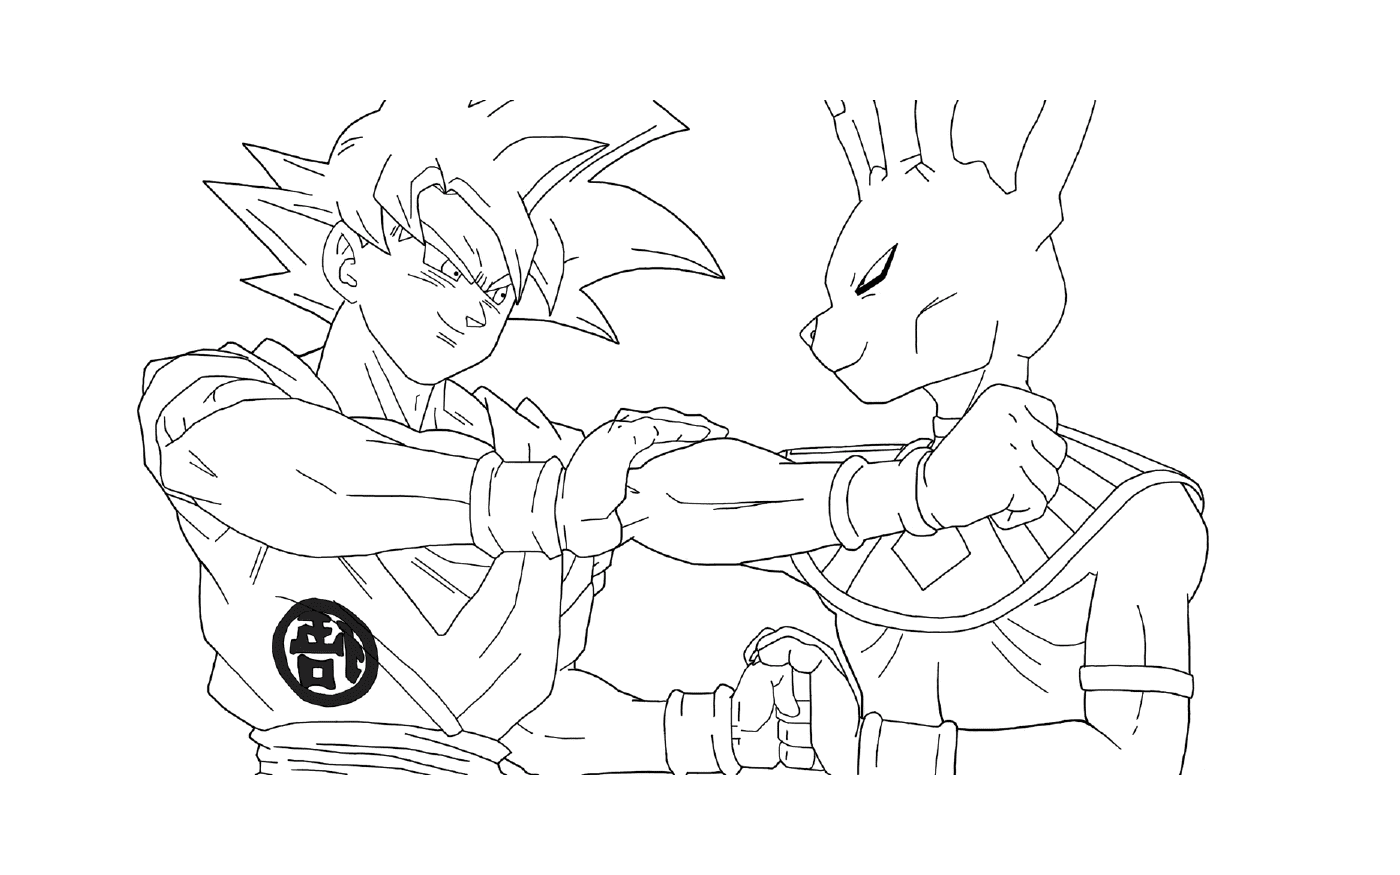  Epic battle between Goku and Beerus 